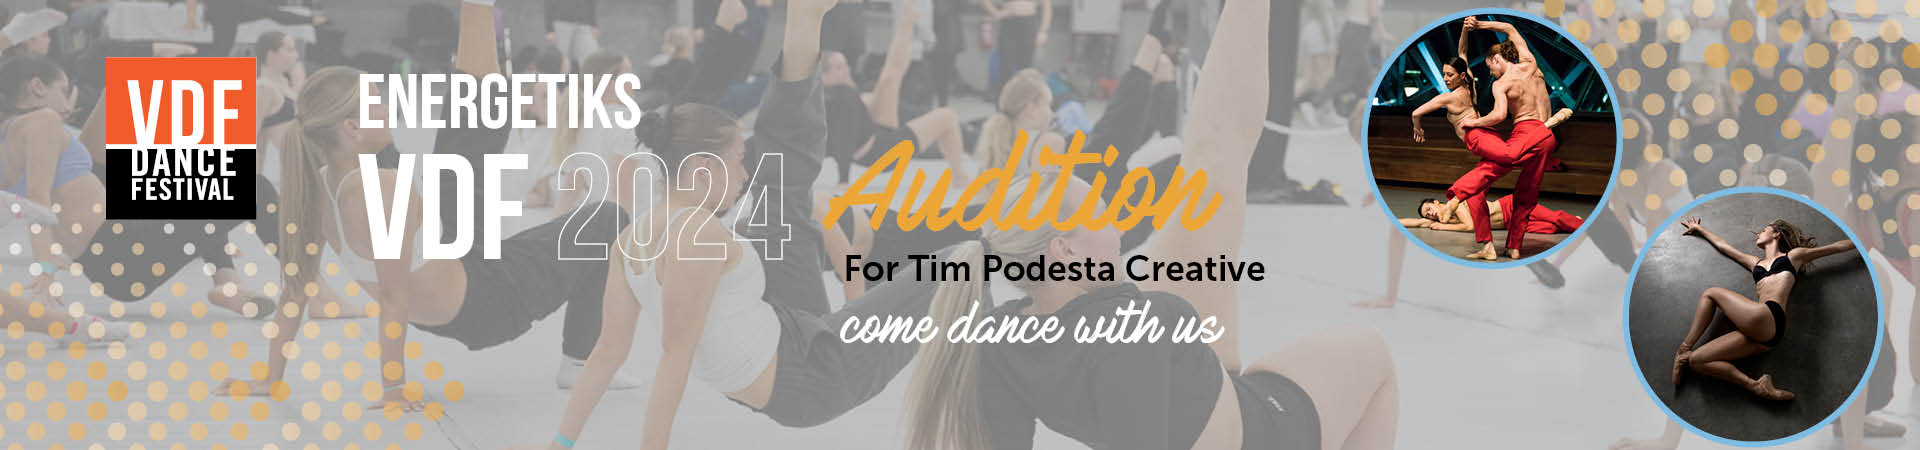 Tim Podesta Creative Auditions at VDF24